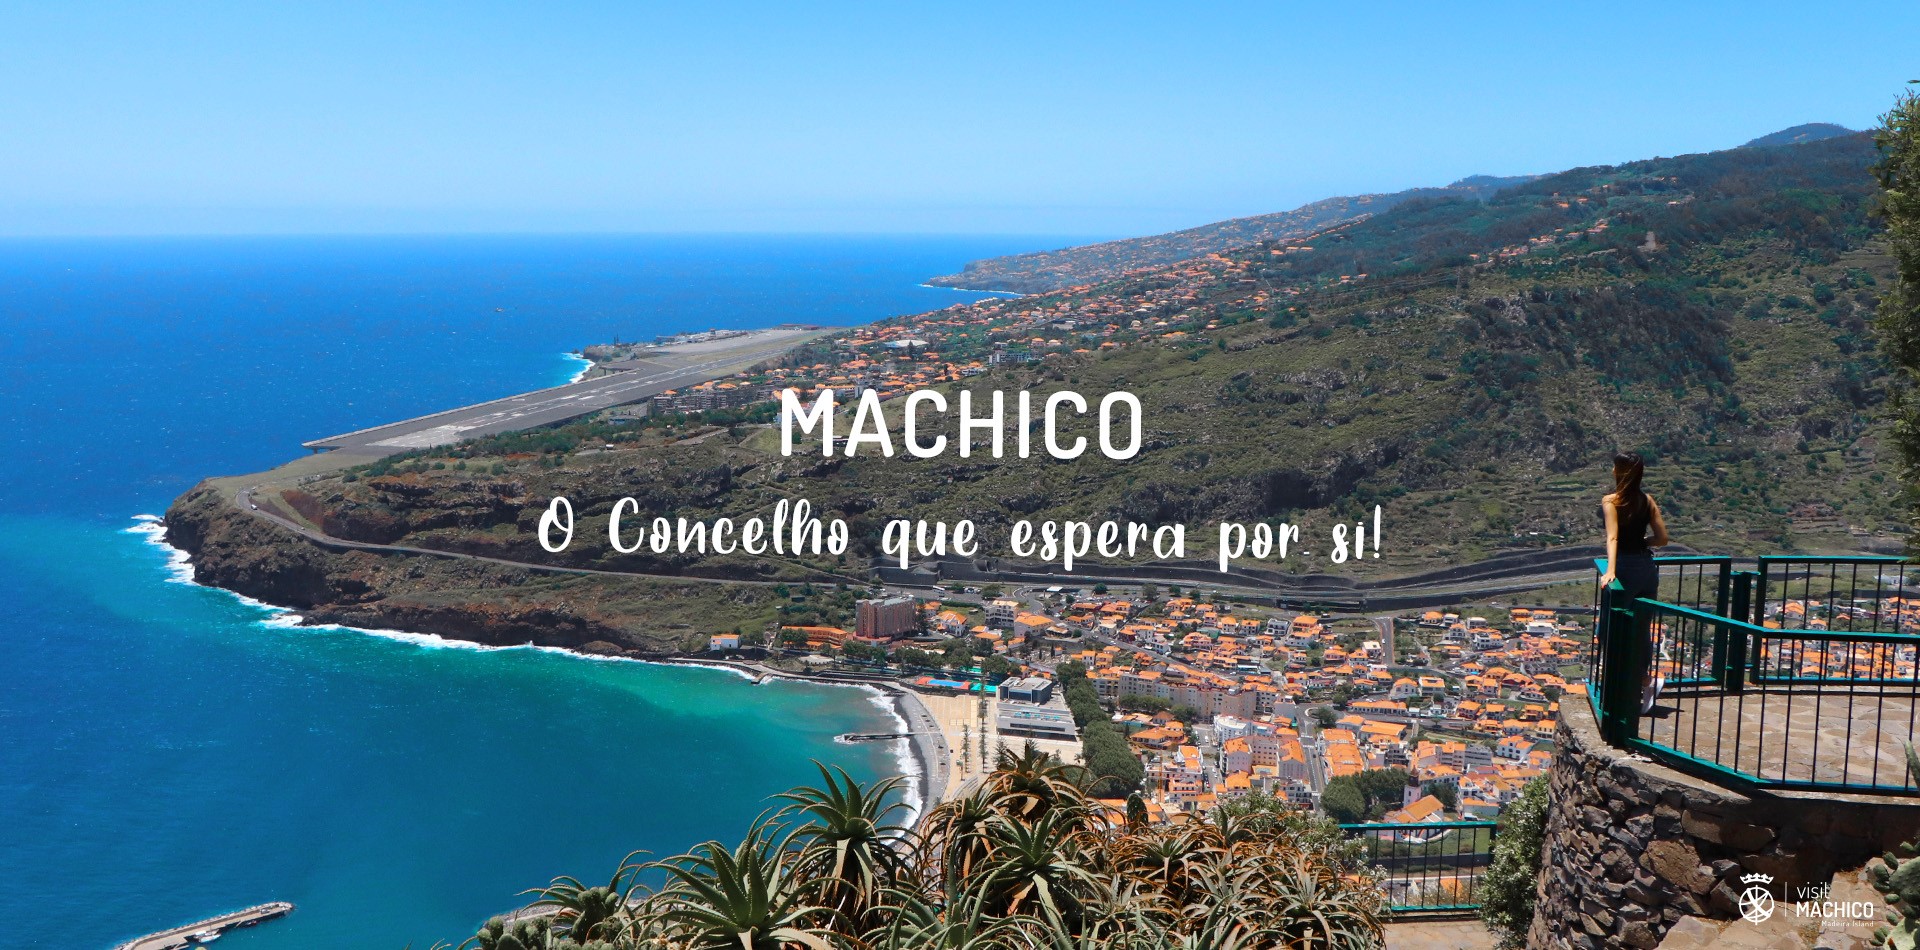 Visit_machico_madeira_island